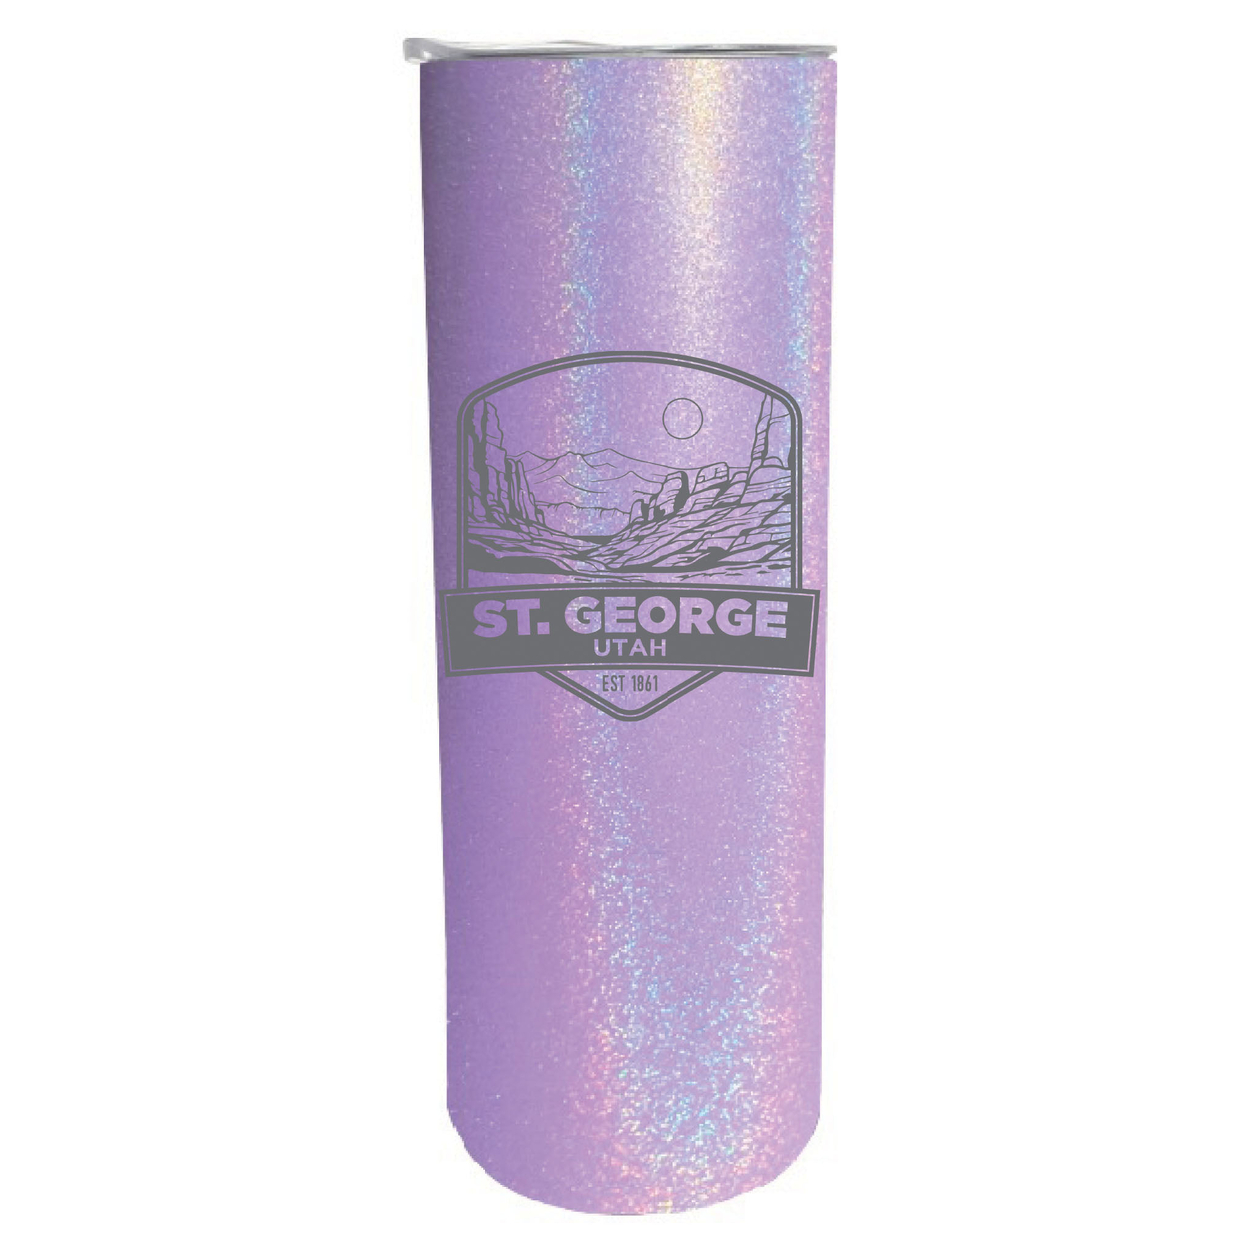 St. George Utah Souvenir 20 Oz Engraved Insulated Stainless Steel Skinny Tumbler - Purple Glitter,,Single Unit